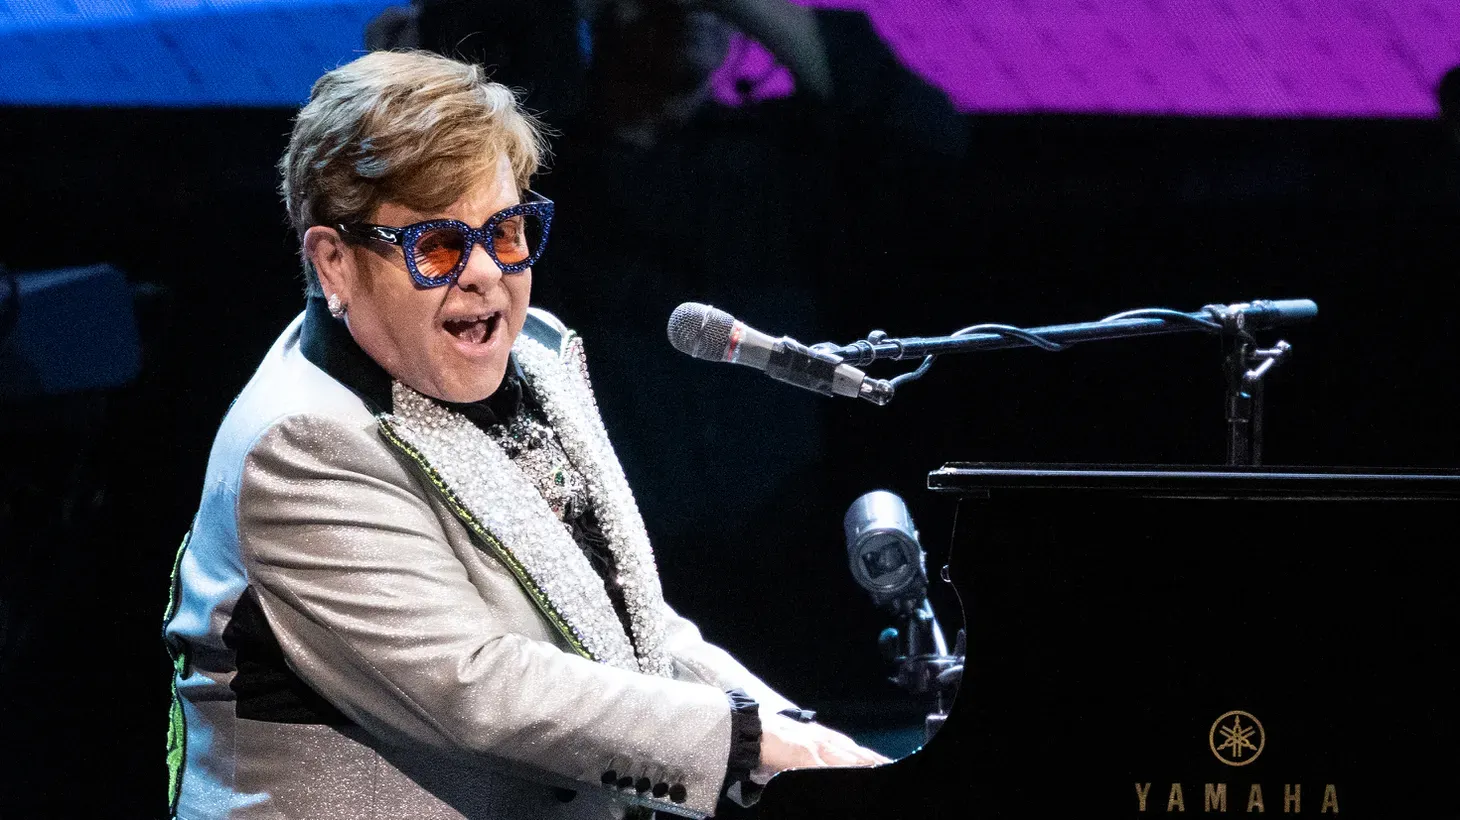 I. Introduction to Elton John and Glam Rock